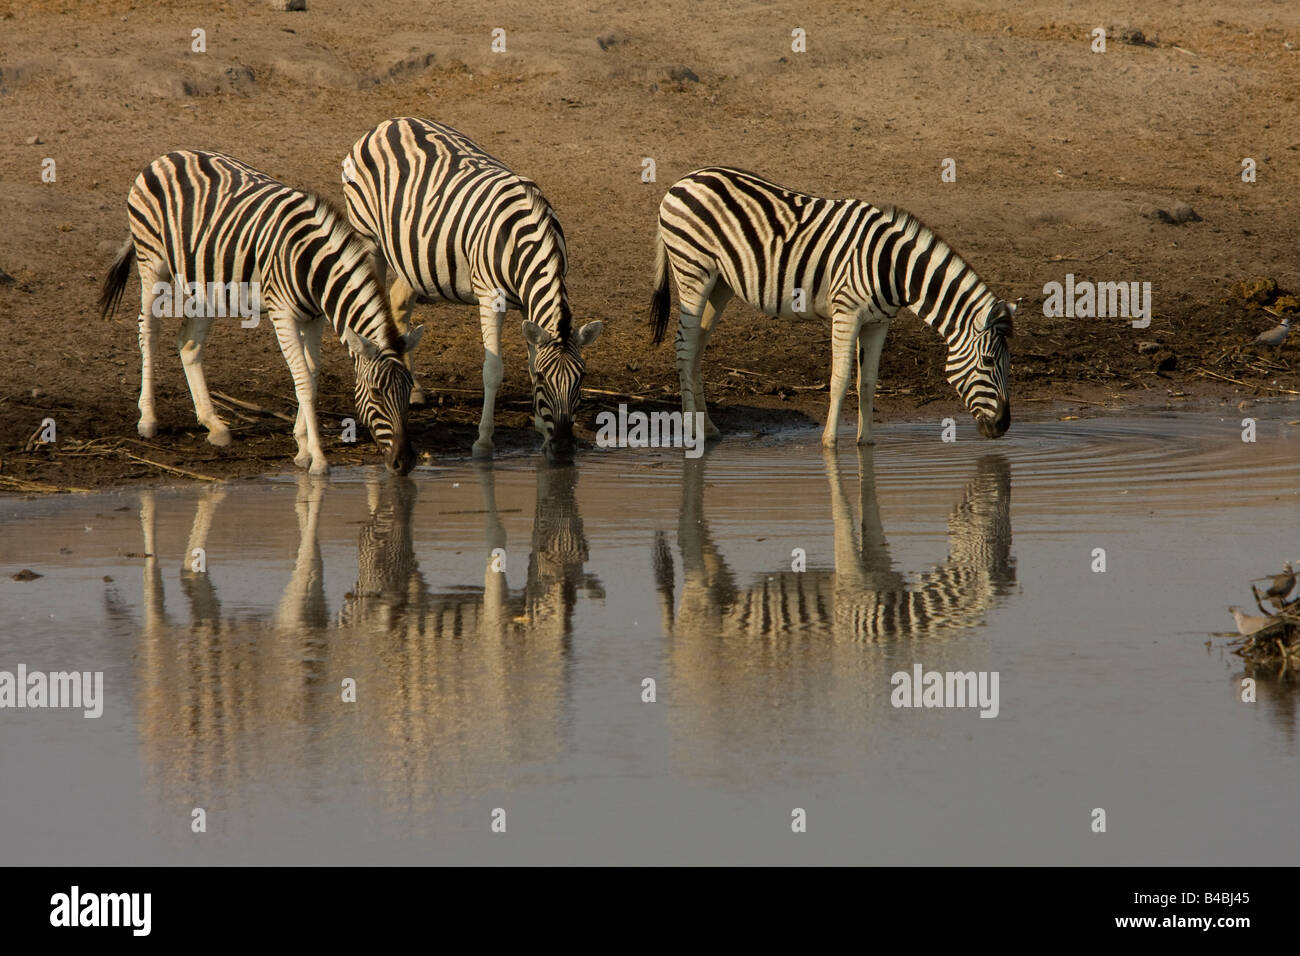 Llanuras Zebra Namibia Foto de stock